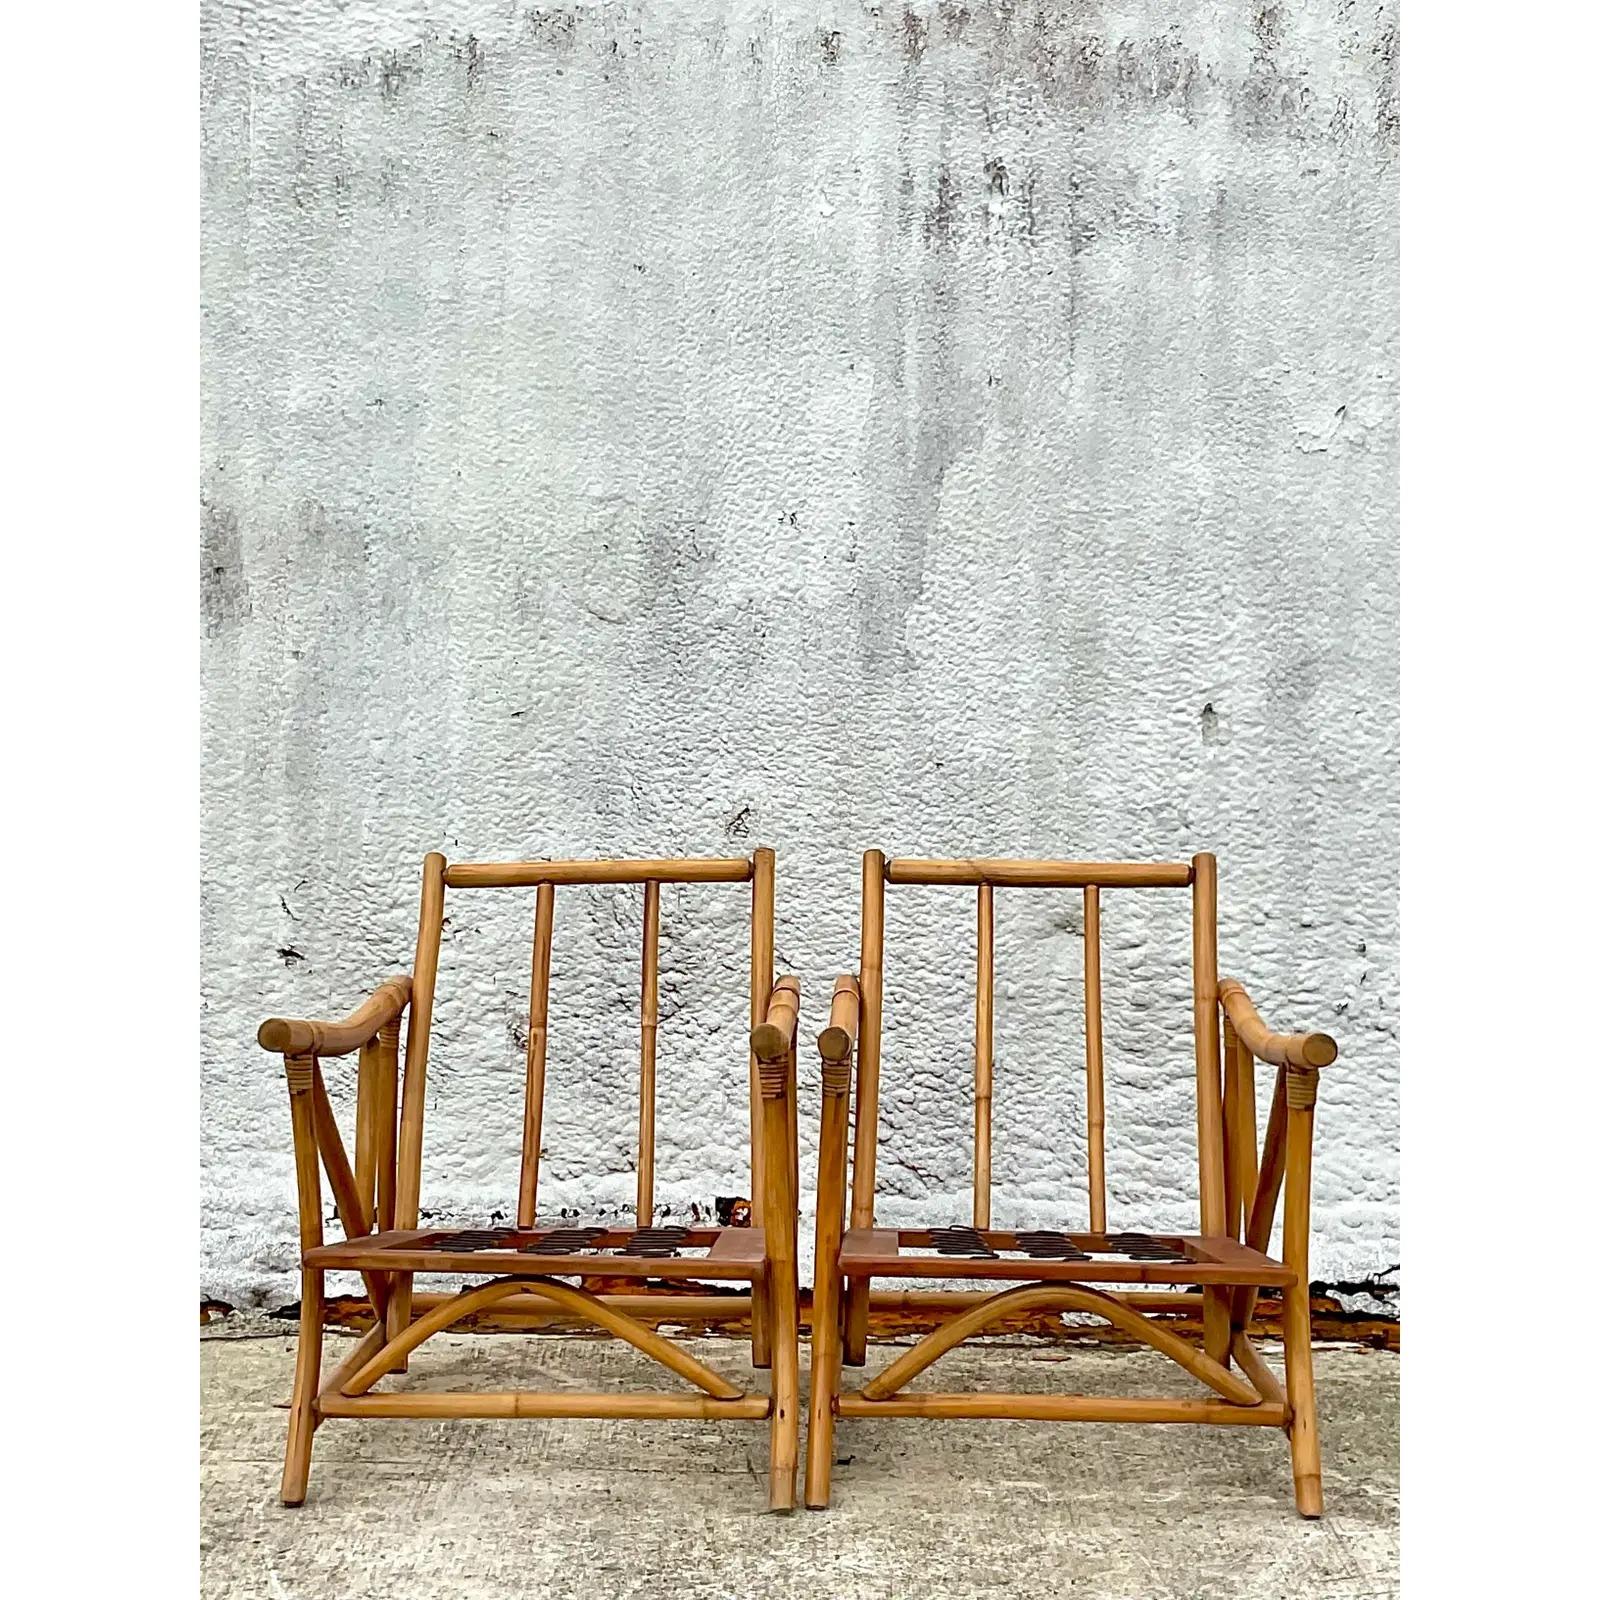 Philippine Vintage Coastal Rattan Pagoda Chairs, a Pair